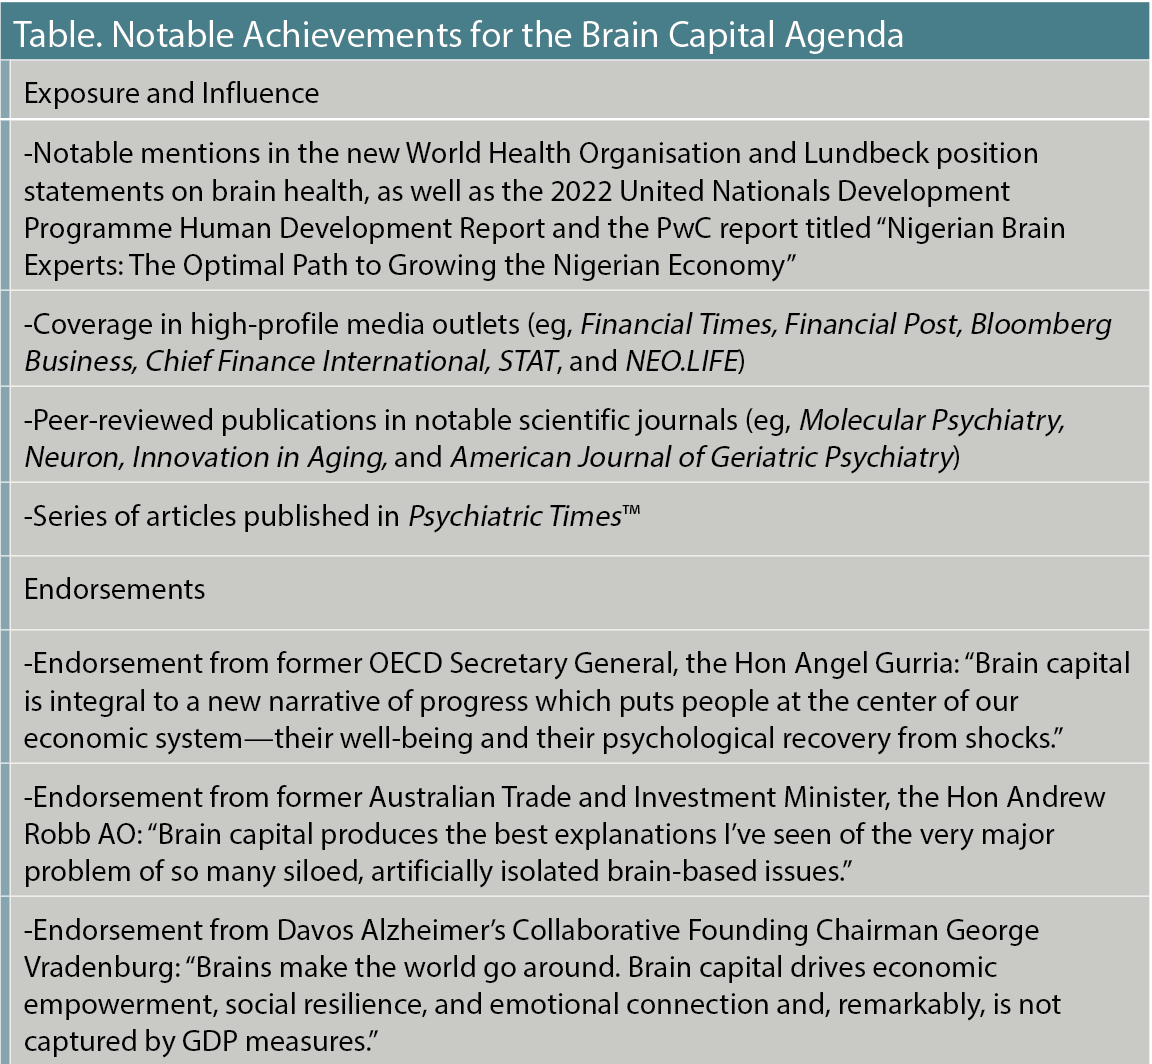 Table. Notable Achievements for the Brain Capital Agenda